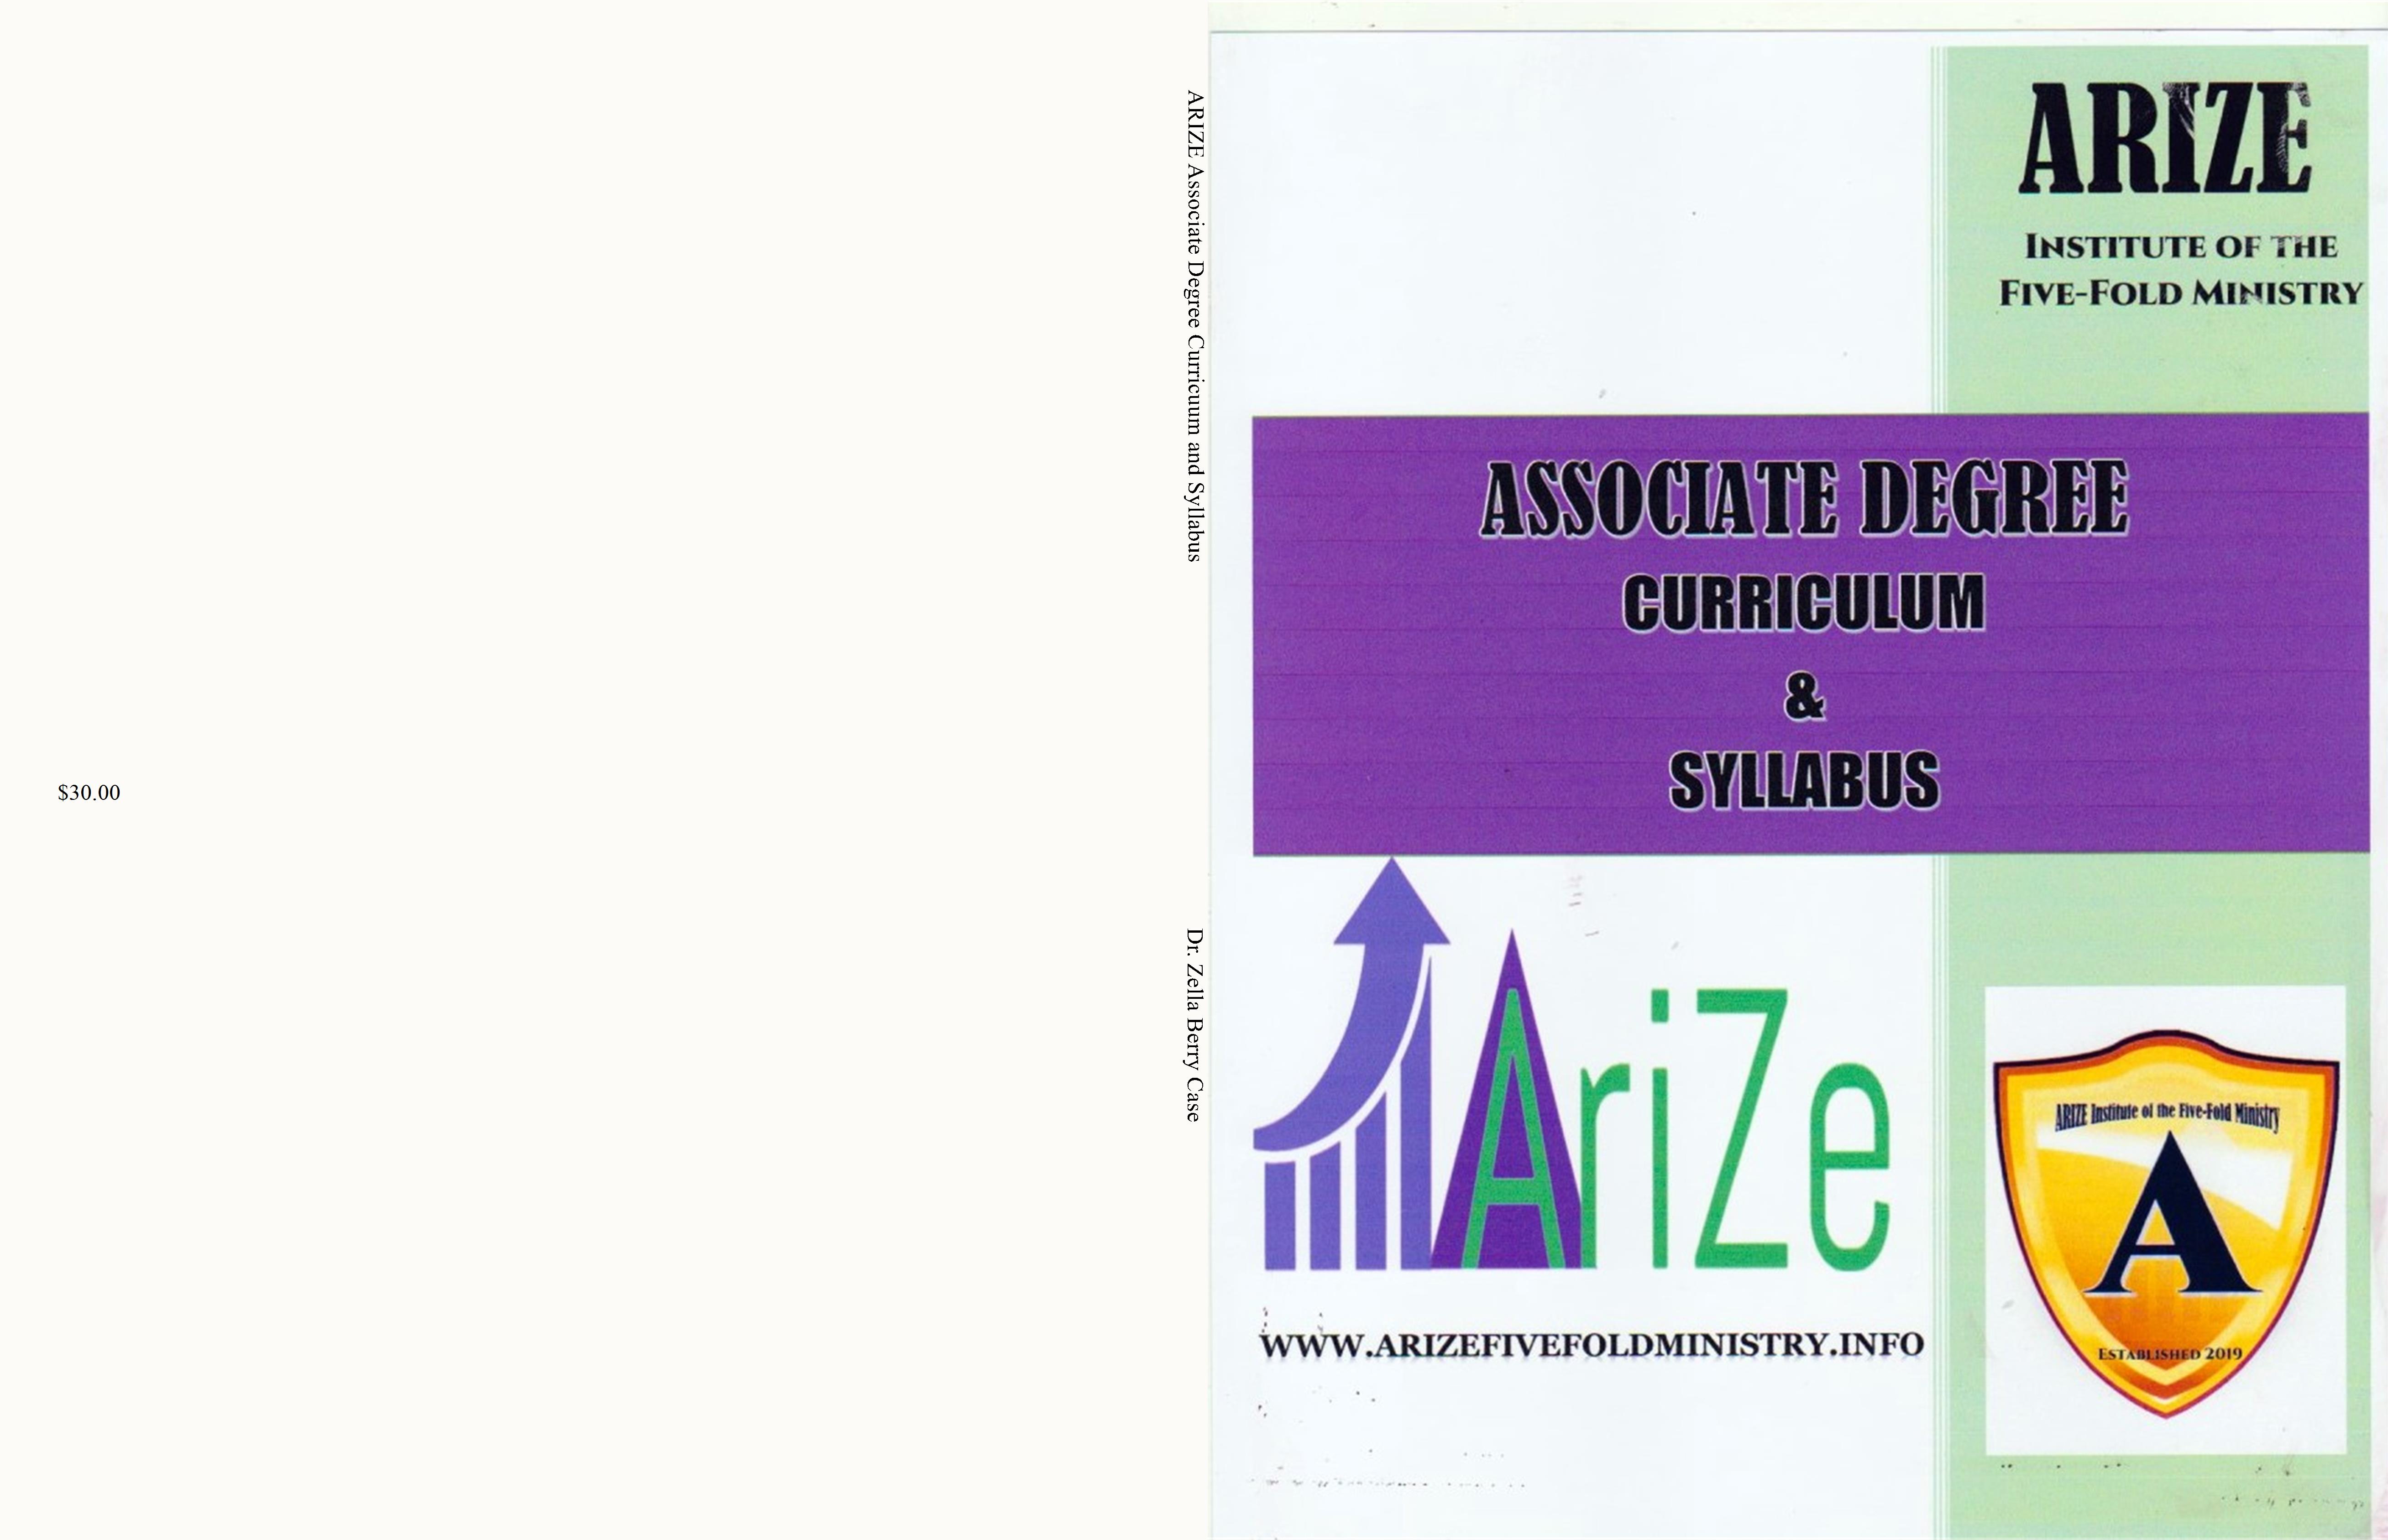 ARIZE Associate Book cover image